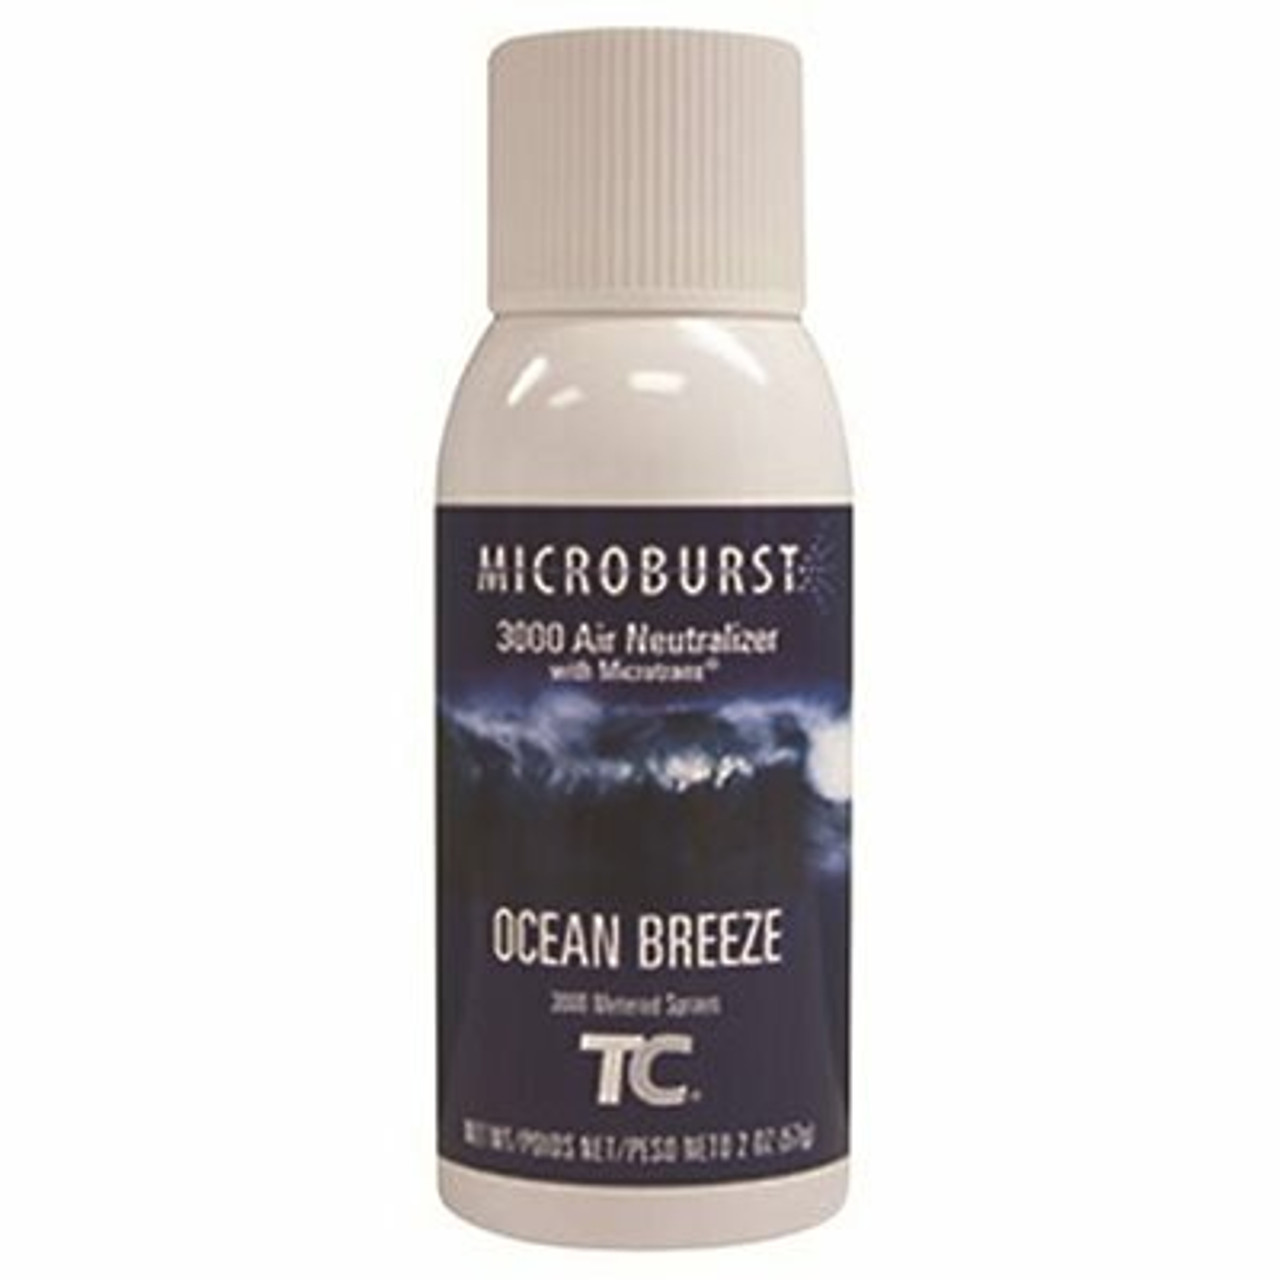 Rubbermaid Commercial Products Microburst 3000 Ocean Breeze Odor Neutralizer Aerosol Dispenser Refill